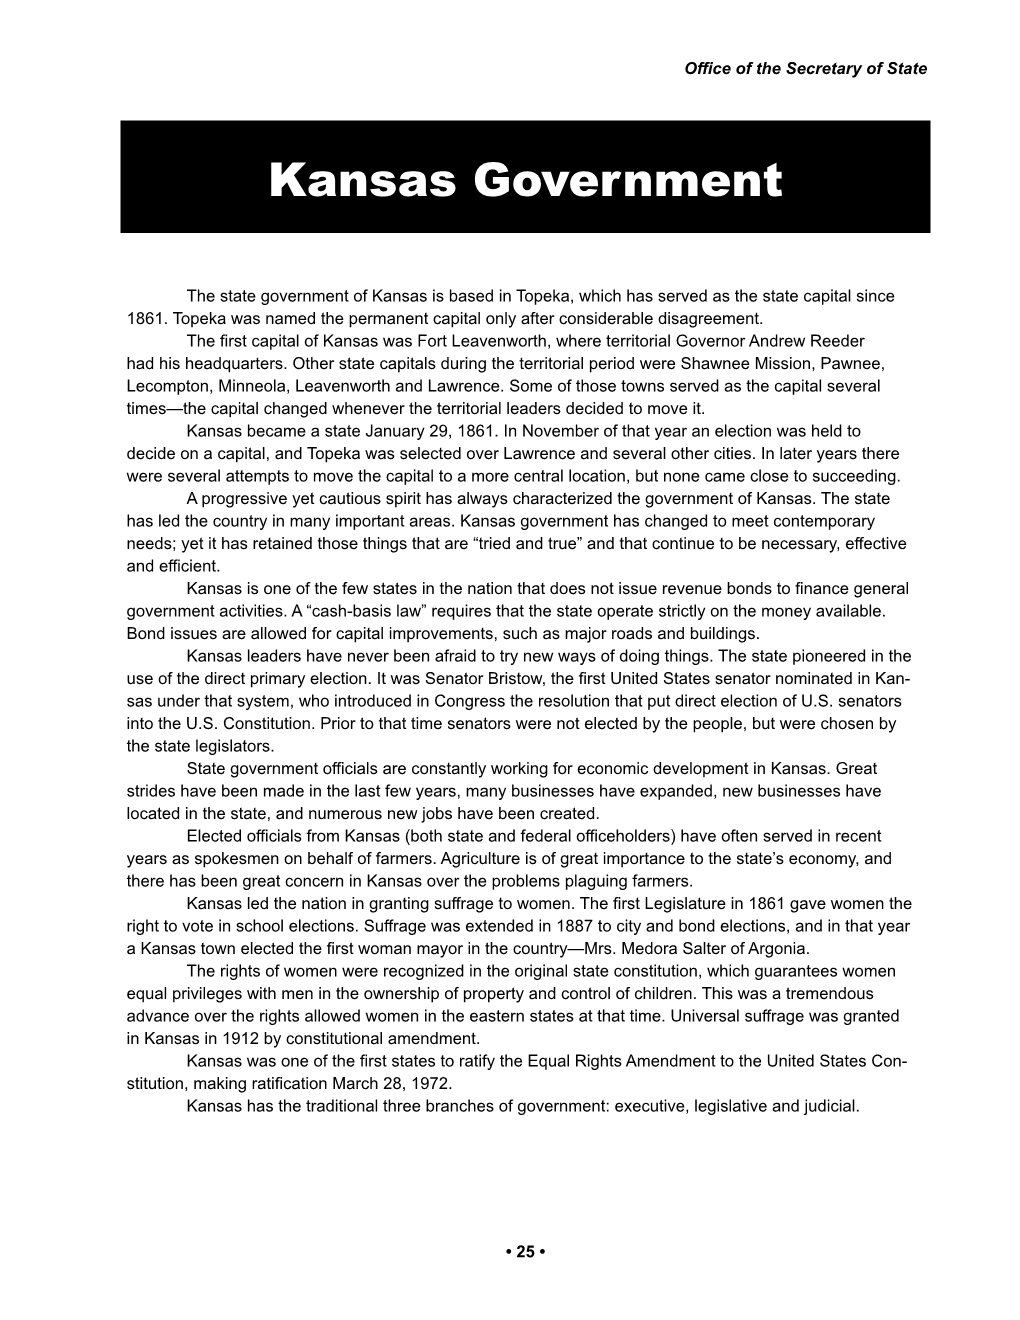 Kansas Government